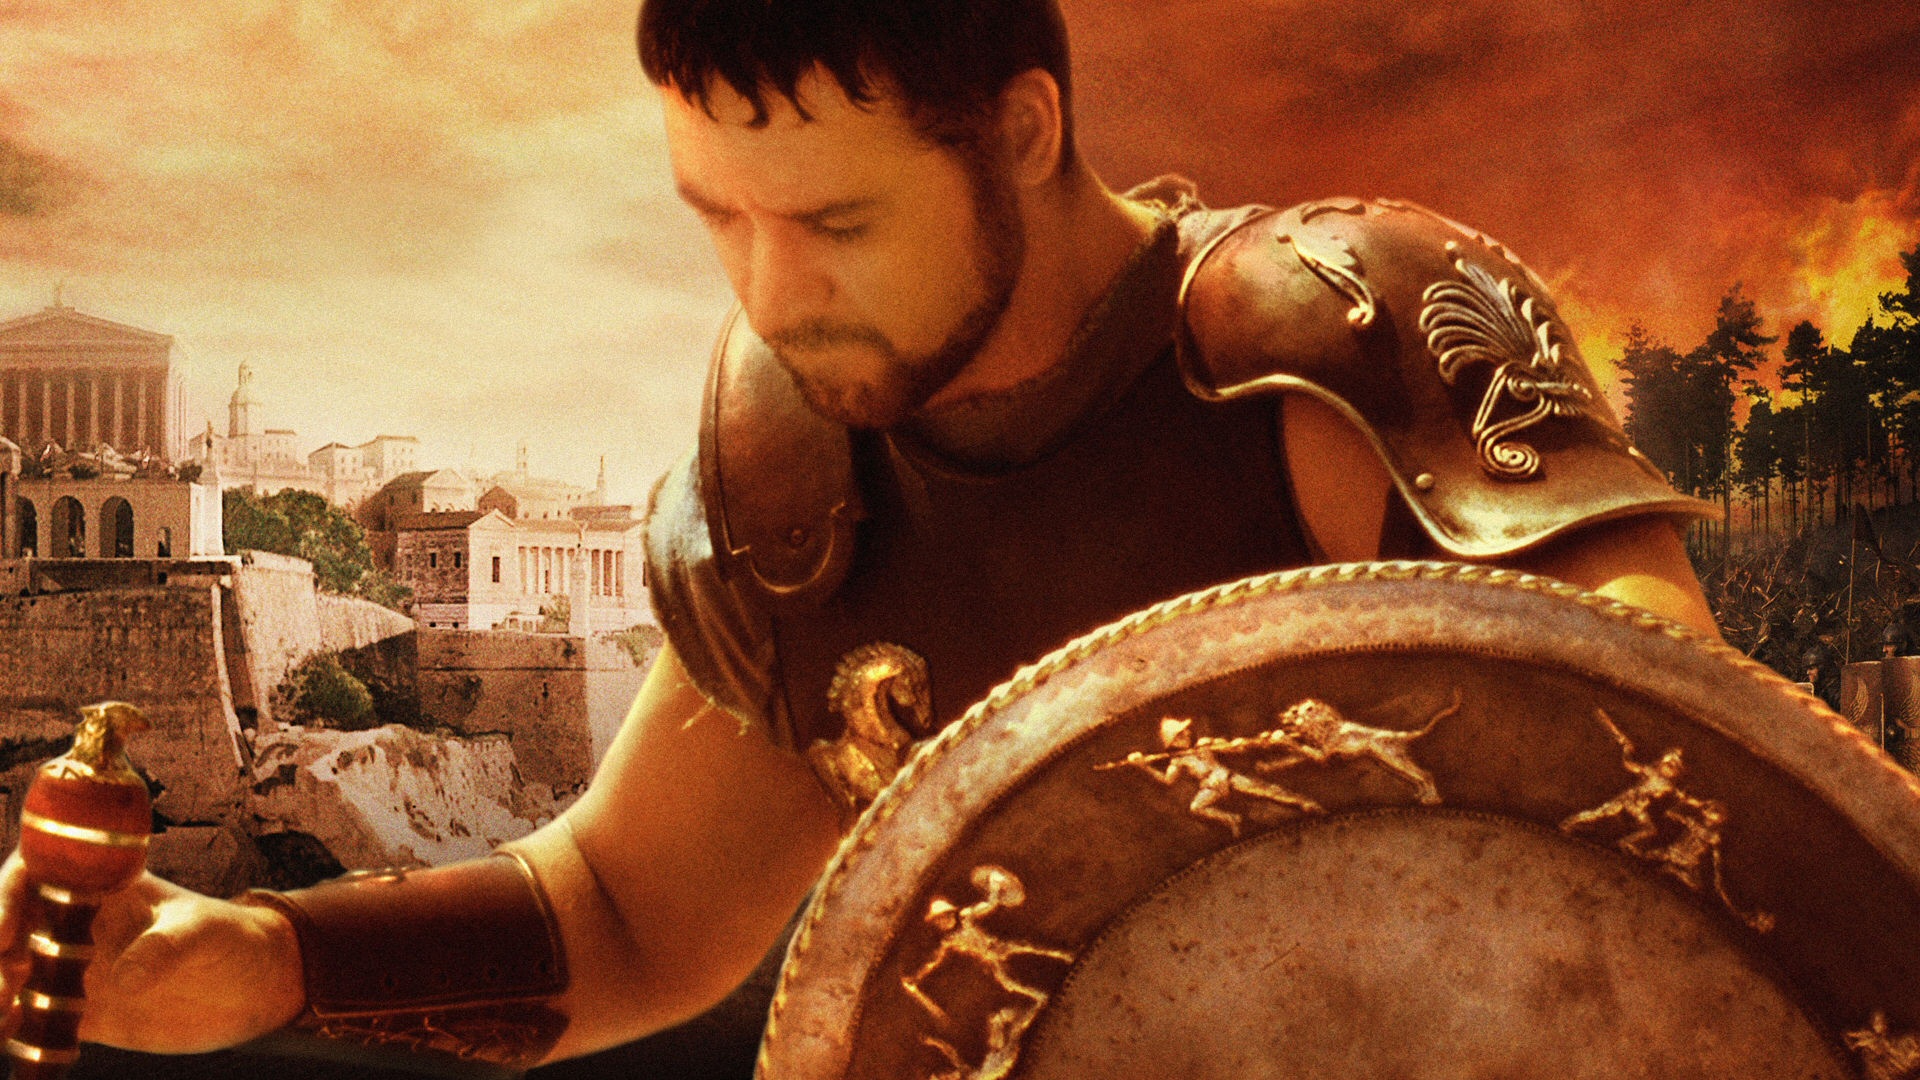 Gladiator – Movie Theme Songs & TV Soundtracks
